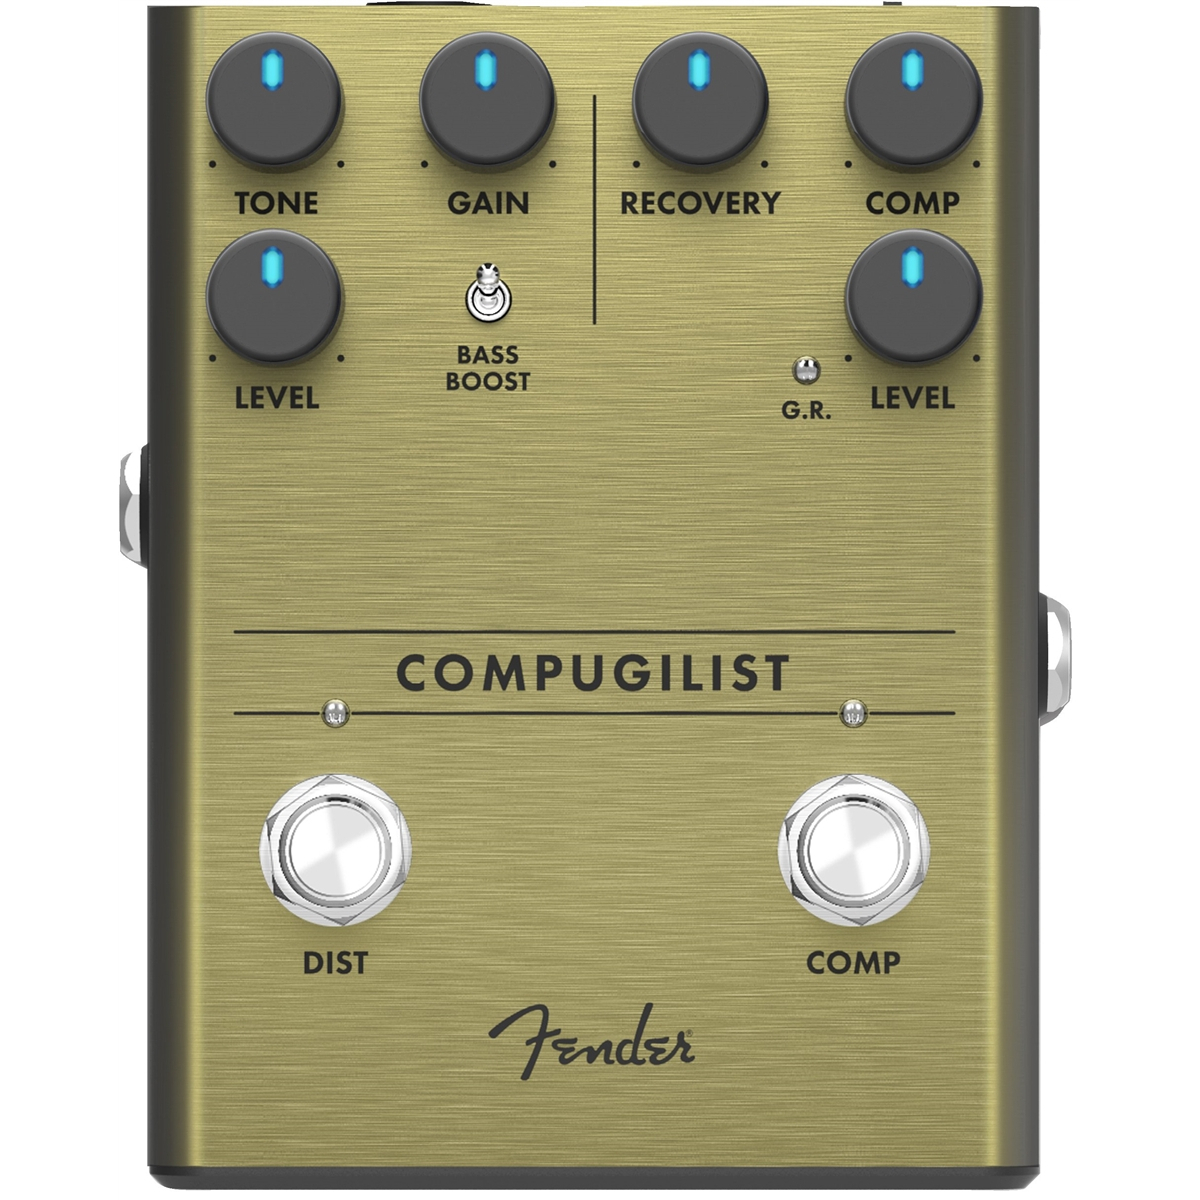 Fender Compugilist Compressor Distortion